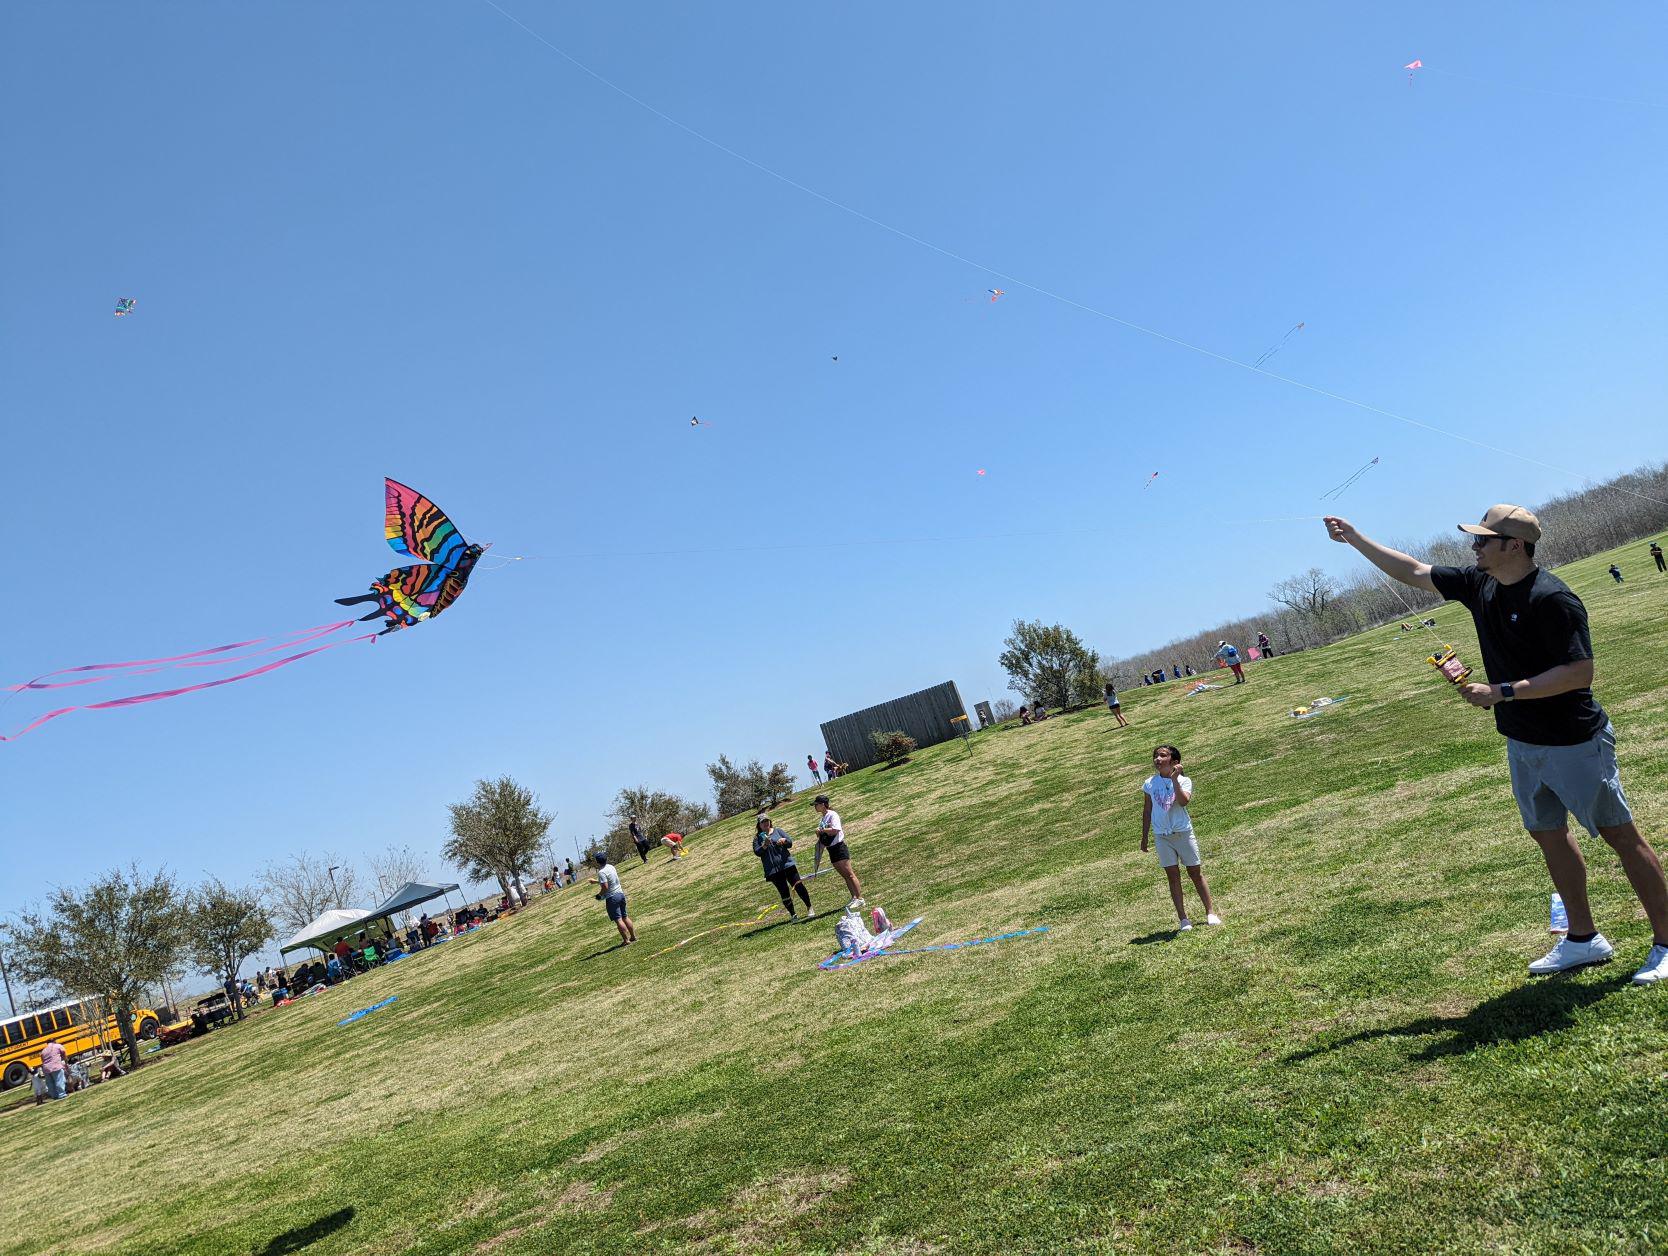 Sugar Land celebrates art, culture and kites at Brazos River Park